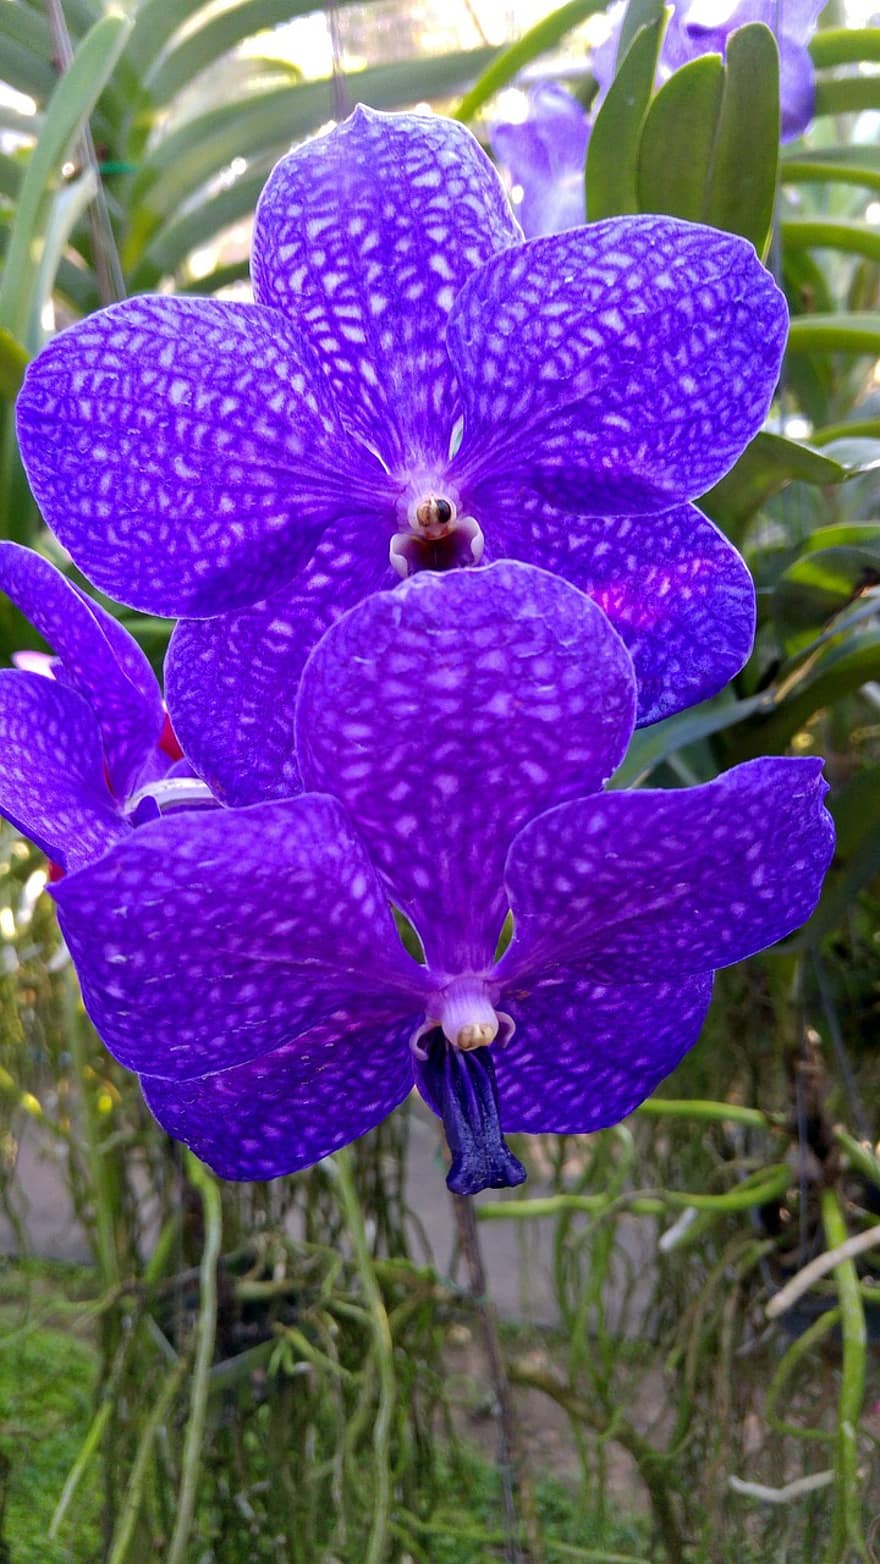 orquídea, plantar, tolet, cor, flor, natureza, Flor, orquídeas, relaxamento, flora, flor de orquídea